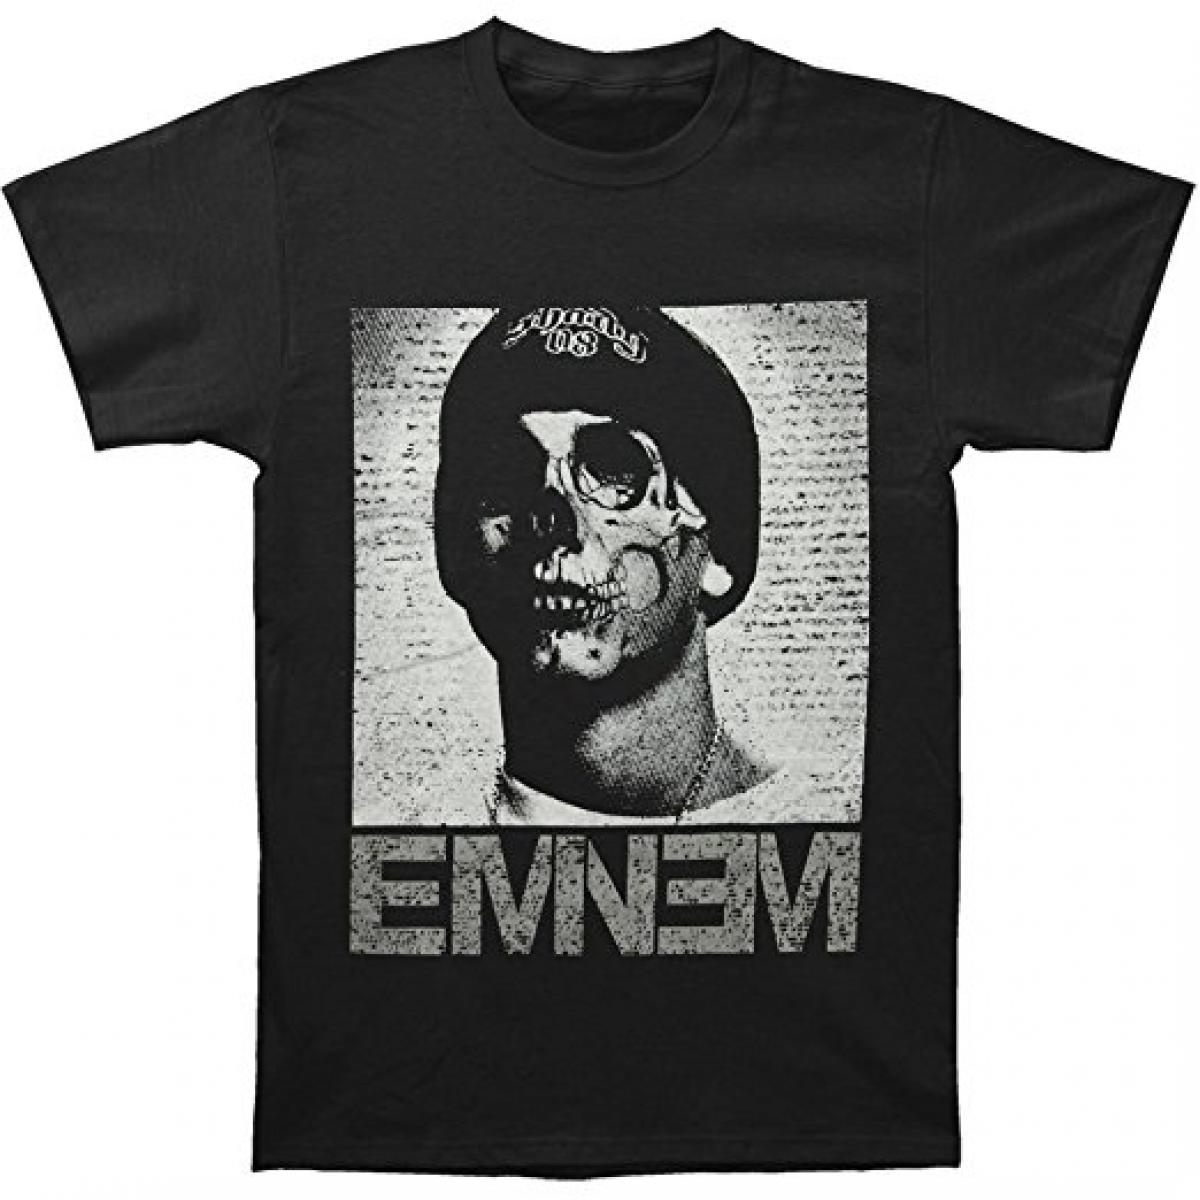 Eminem Skull Face T-shirt